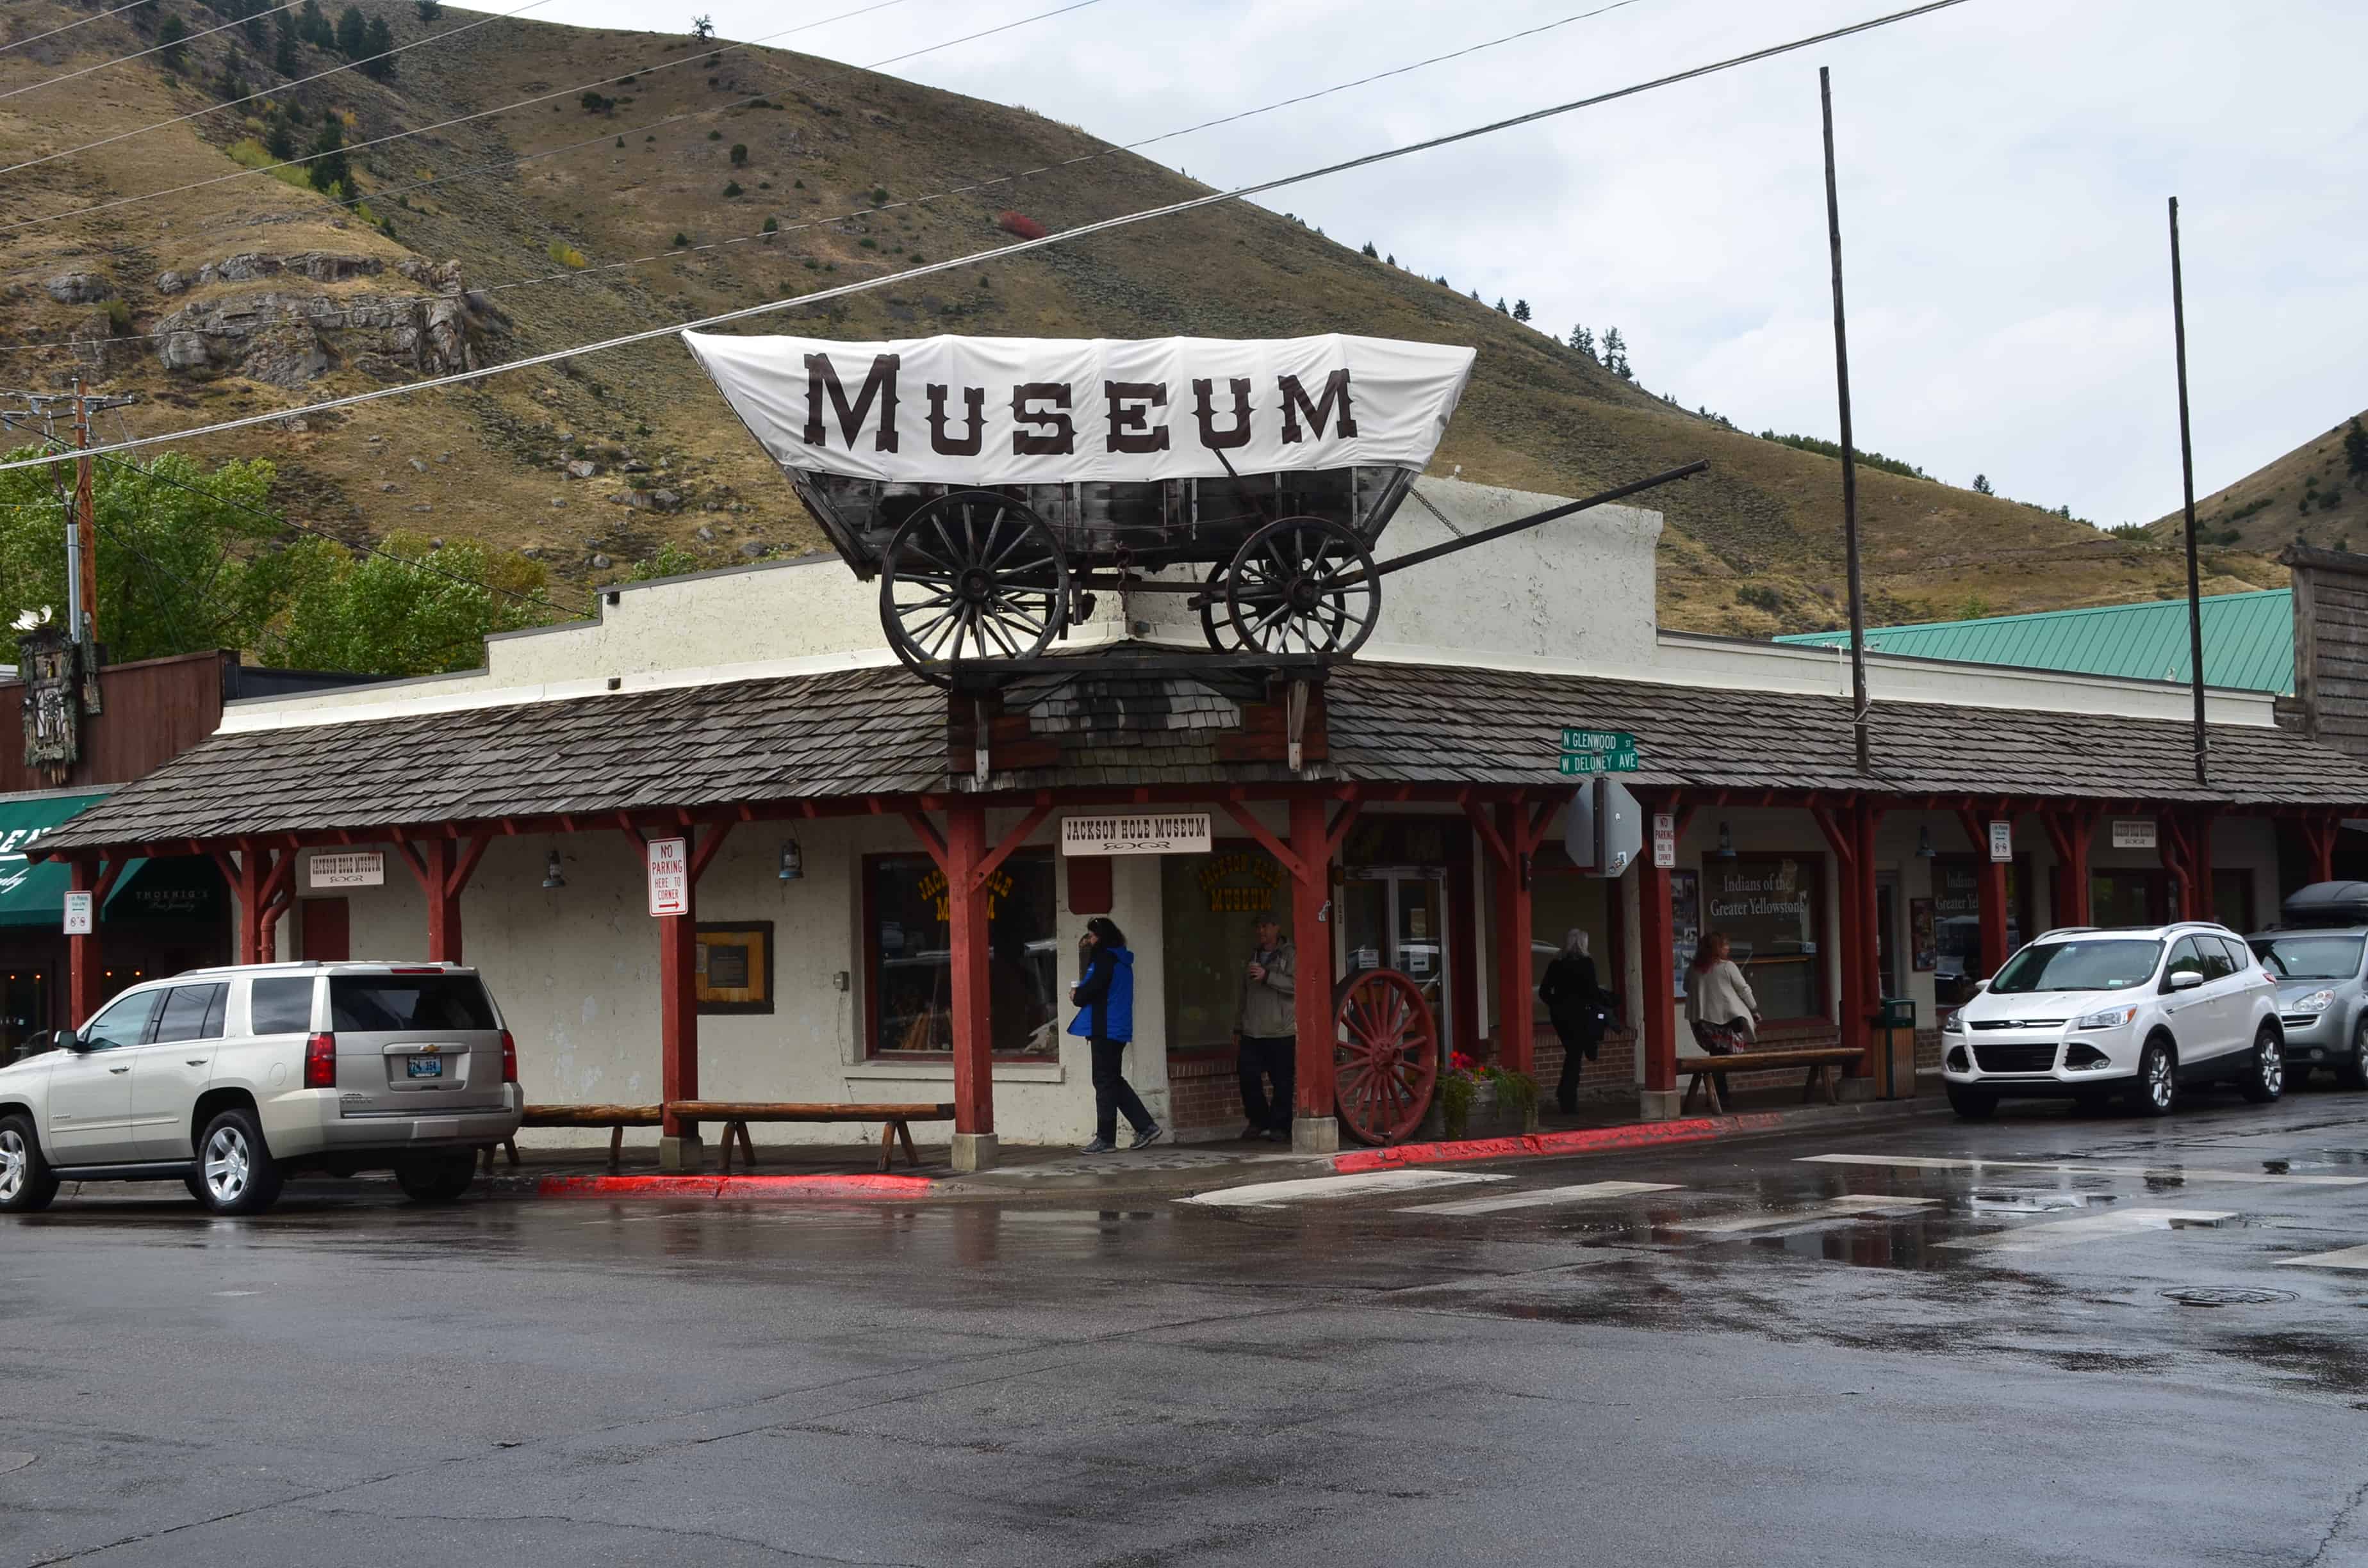 Jackson Hole Museum in Jackson, Wyoming